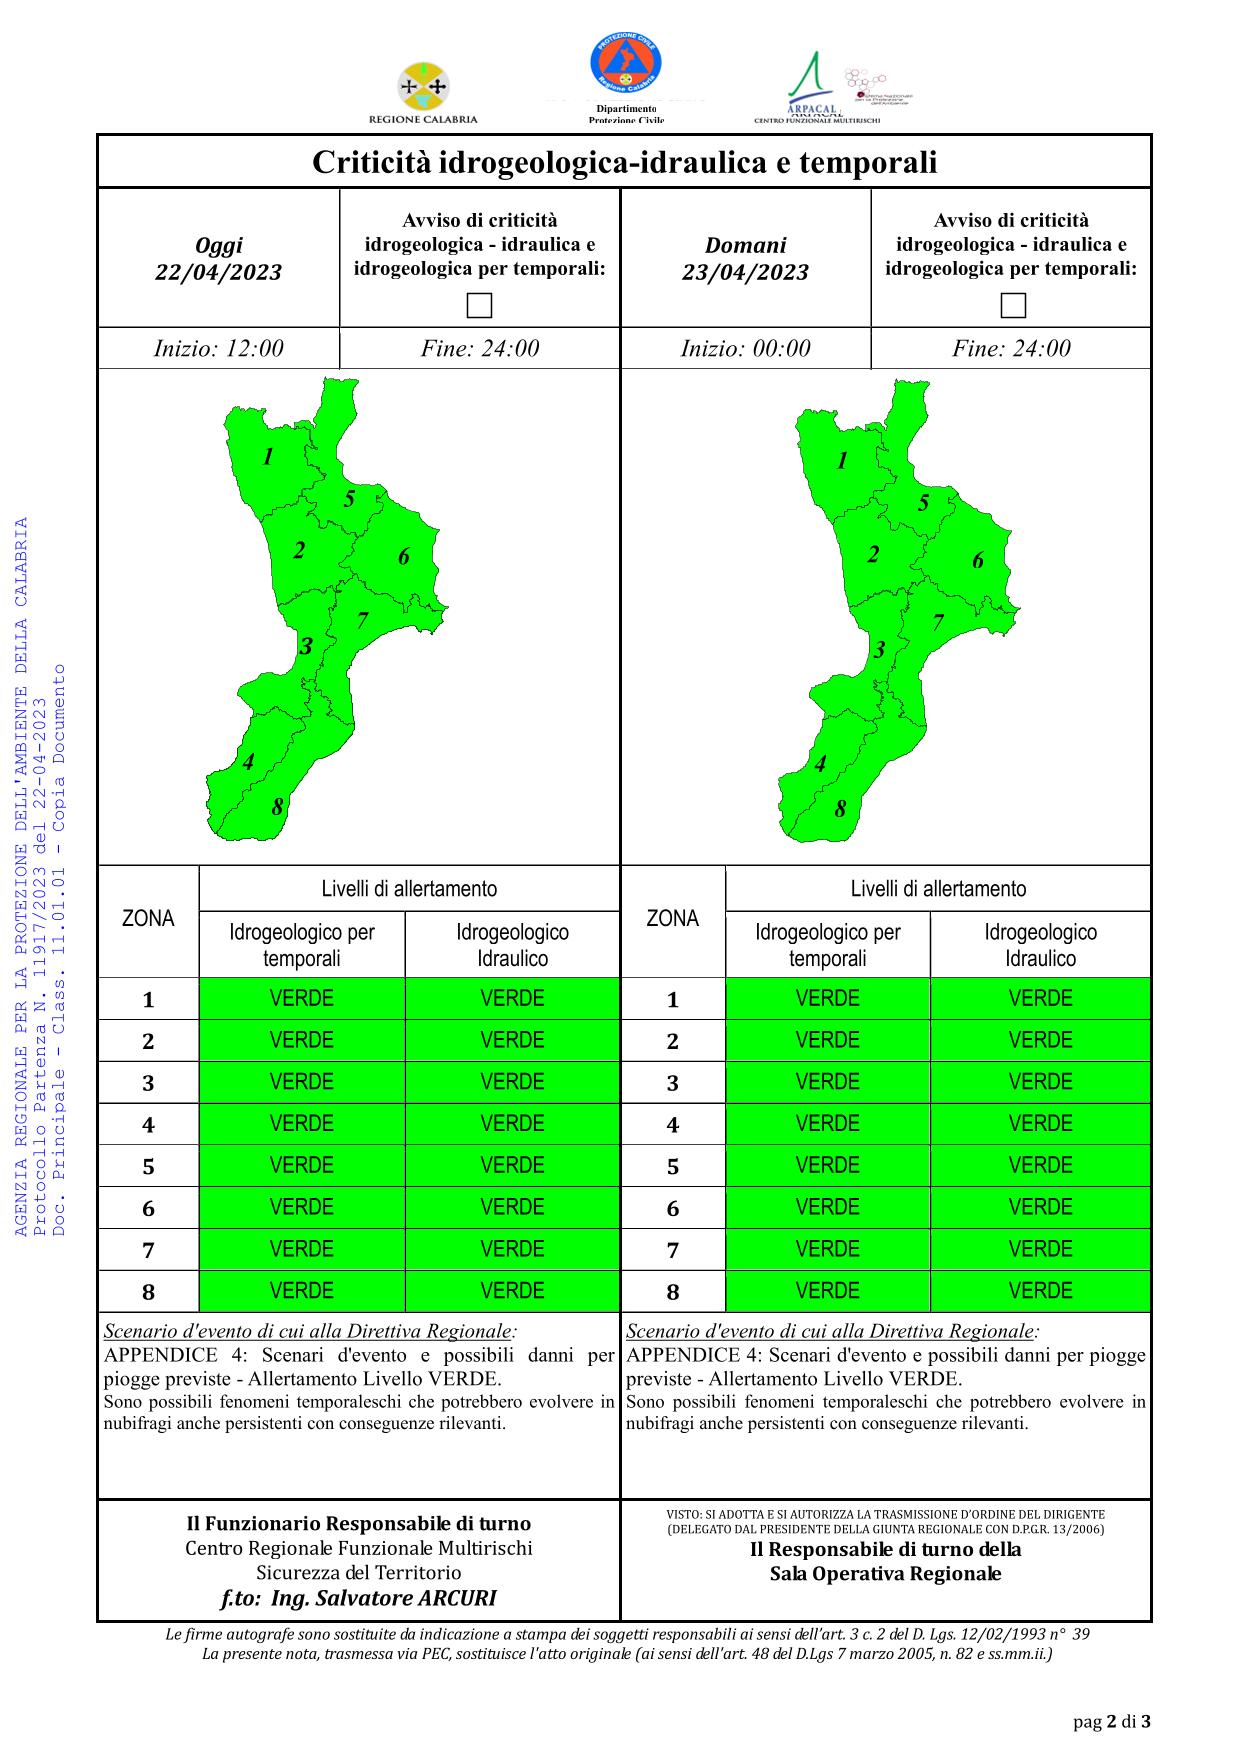 Criticità idrogeologica-idraulica e temporali in Calabria 22-04-2023